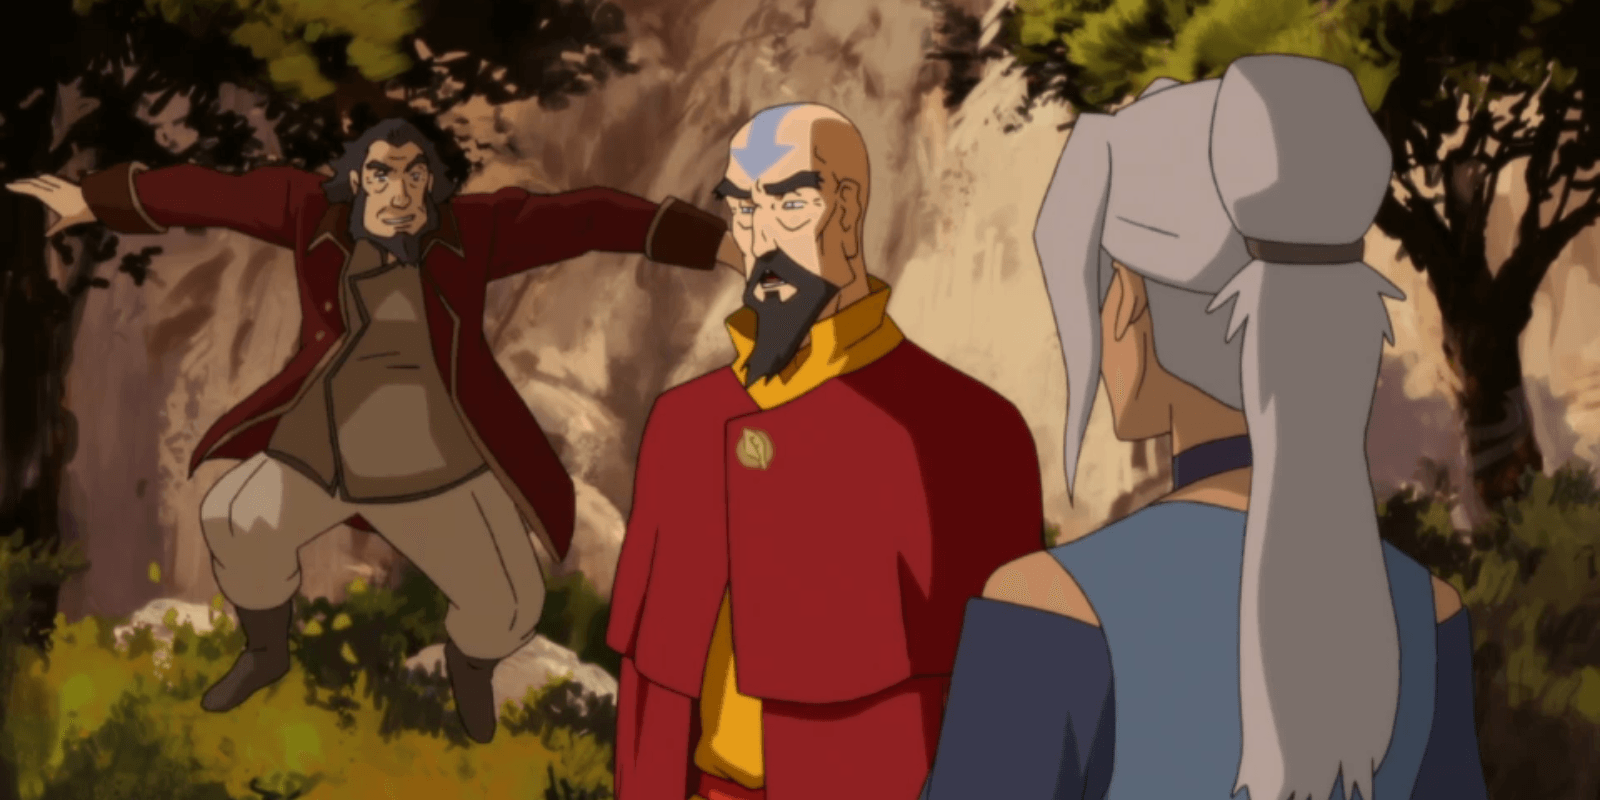 Bumi, Tenzin and Kya from Legend of Korra